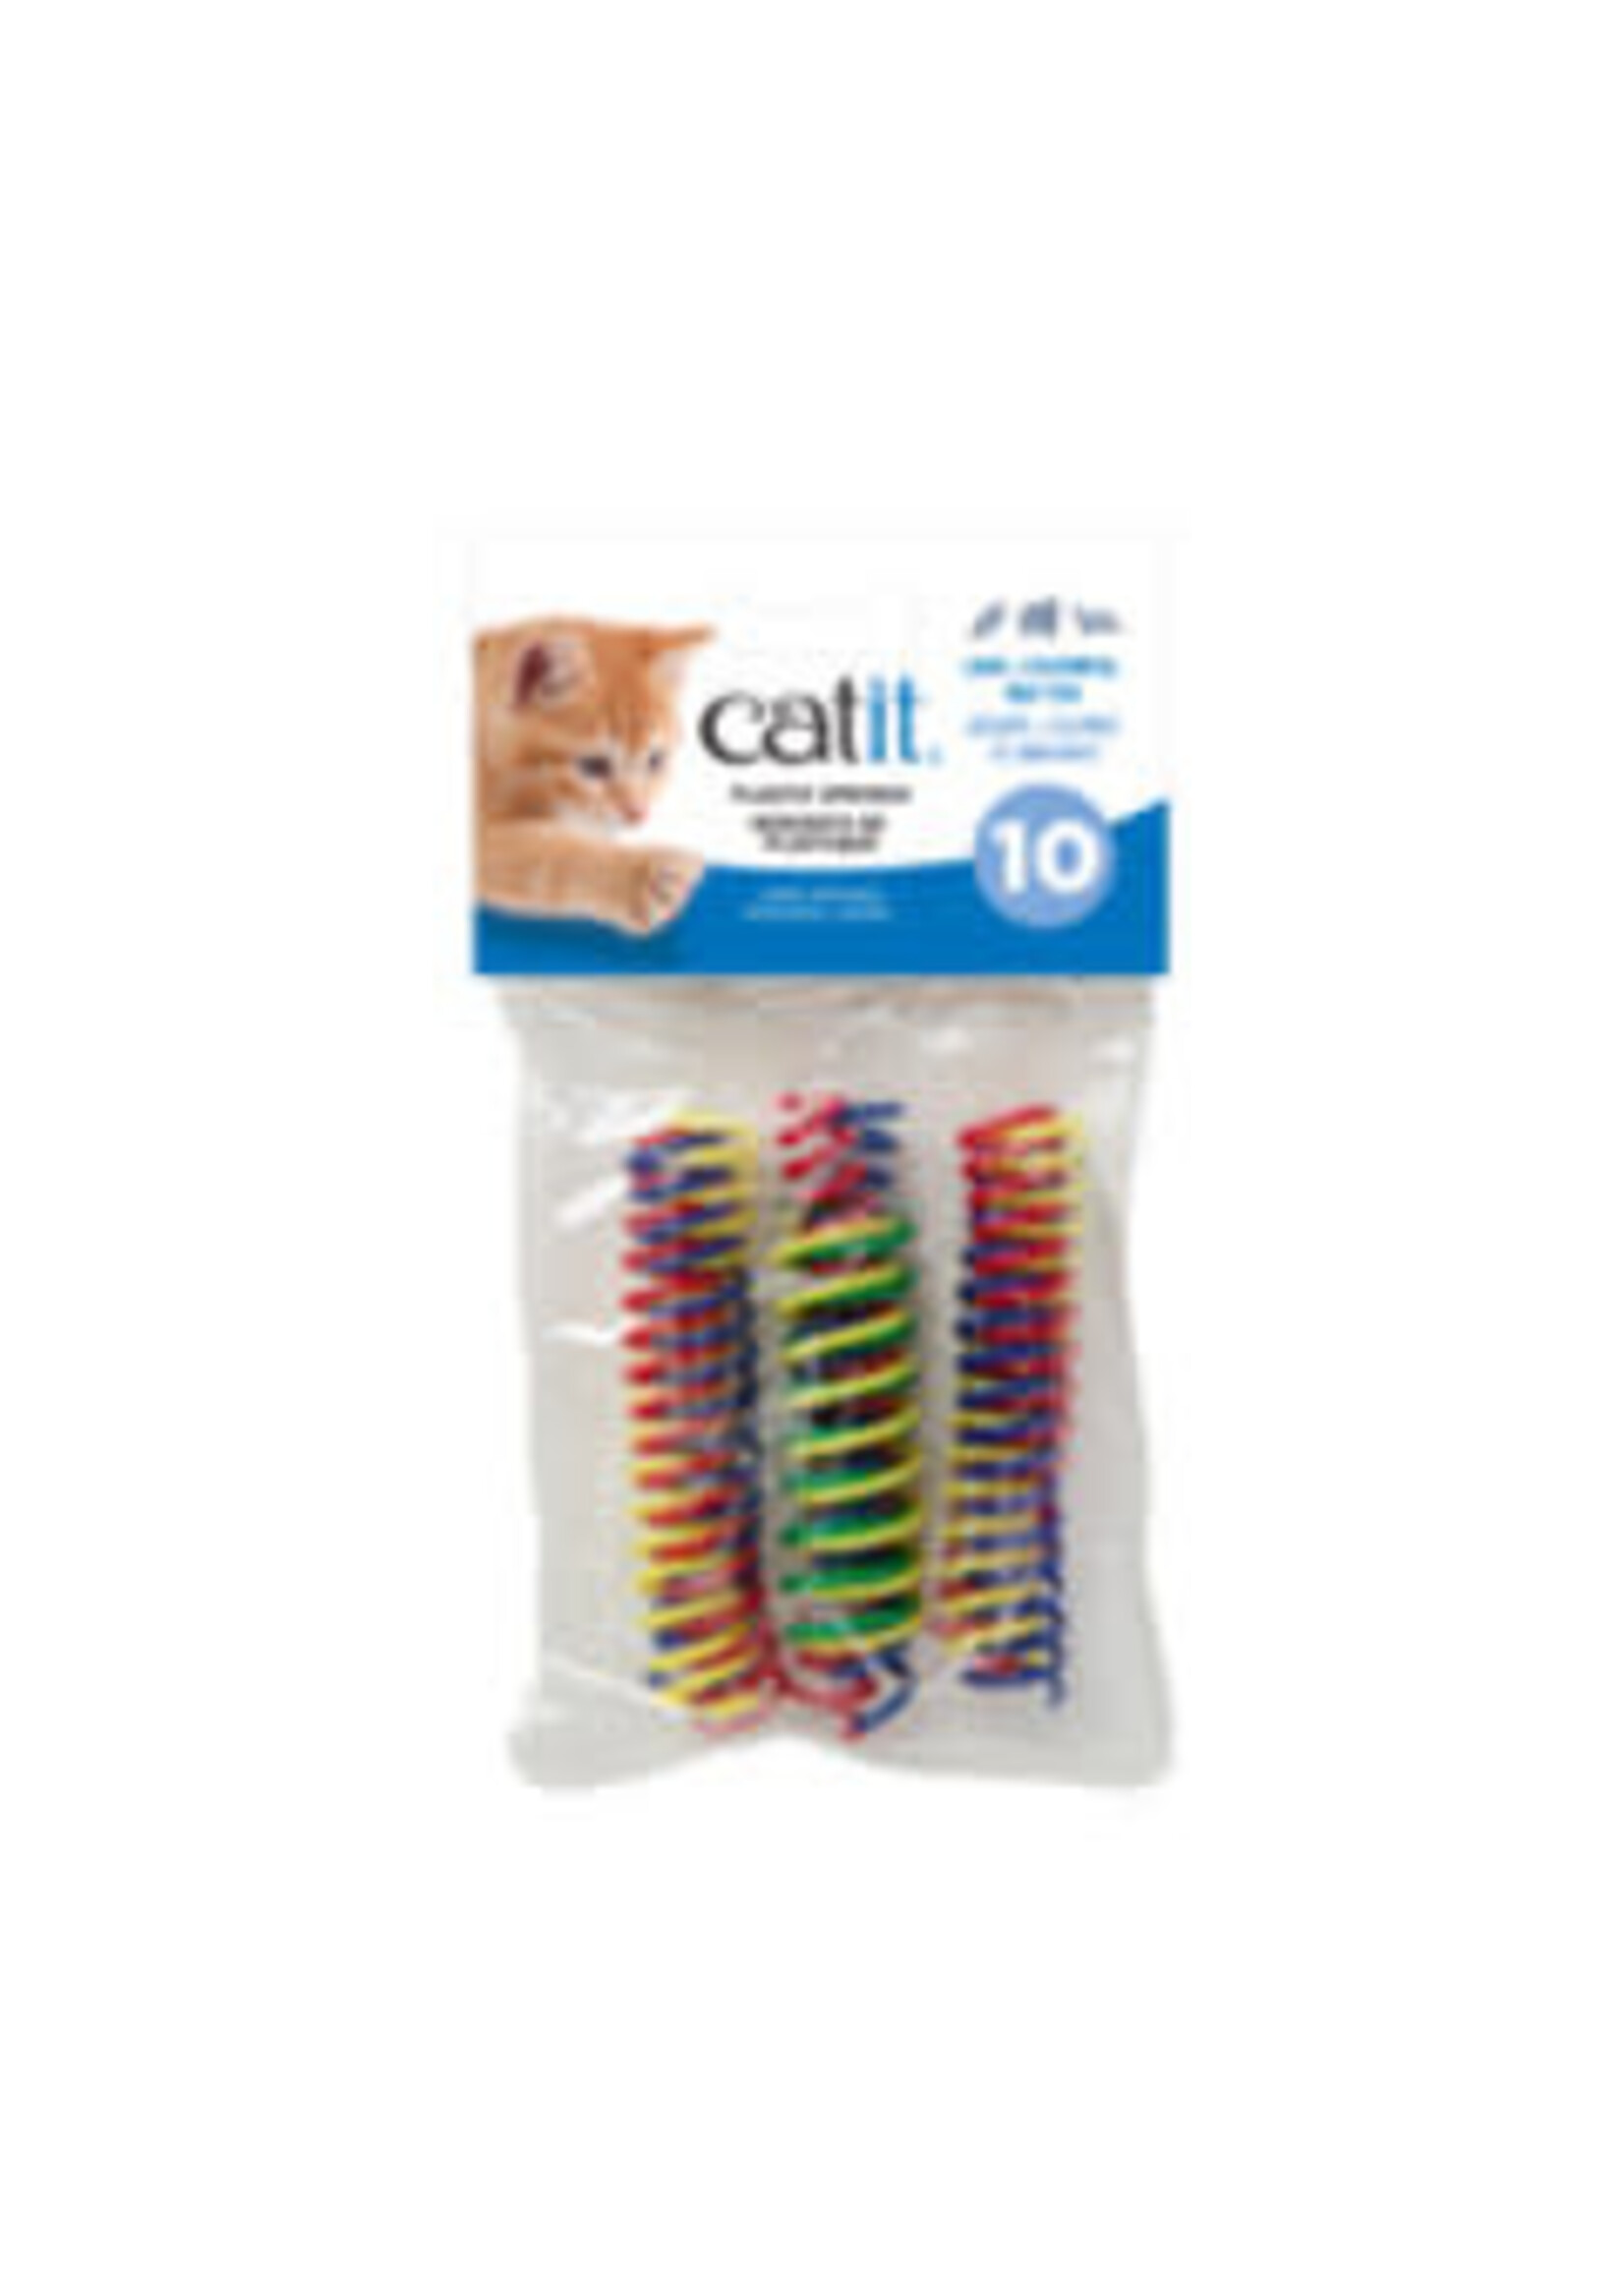 Catit Catit Plastic Springs - Long - 10 pack